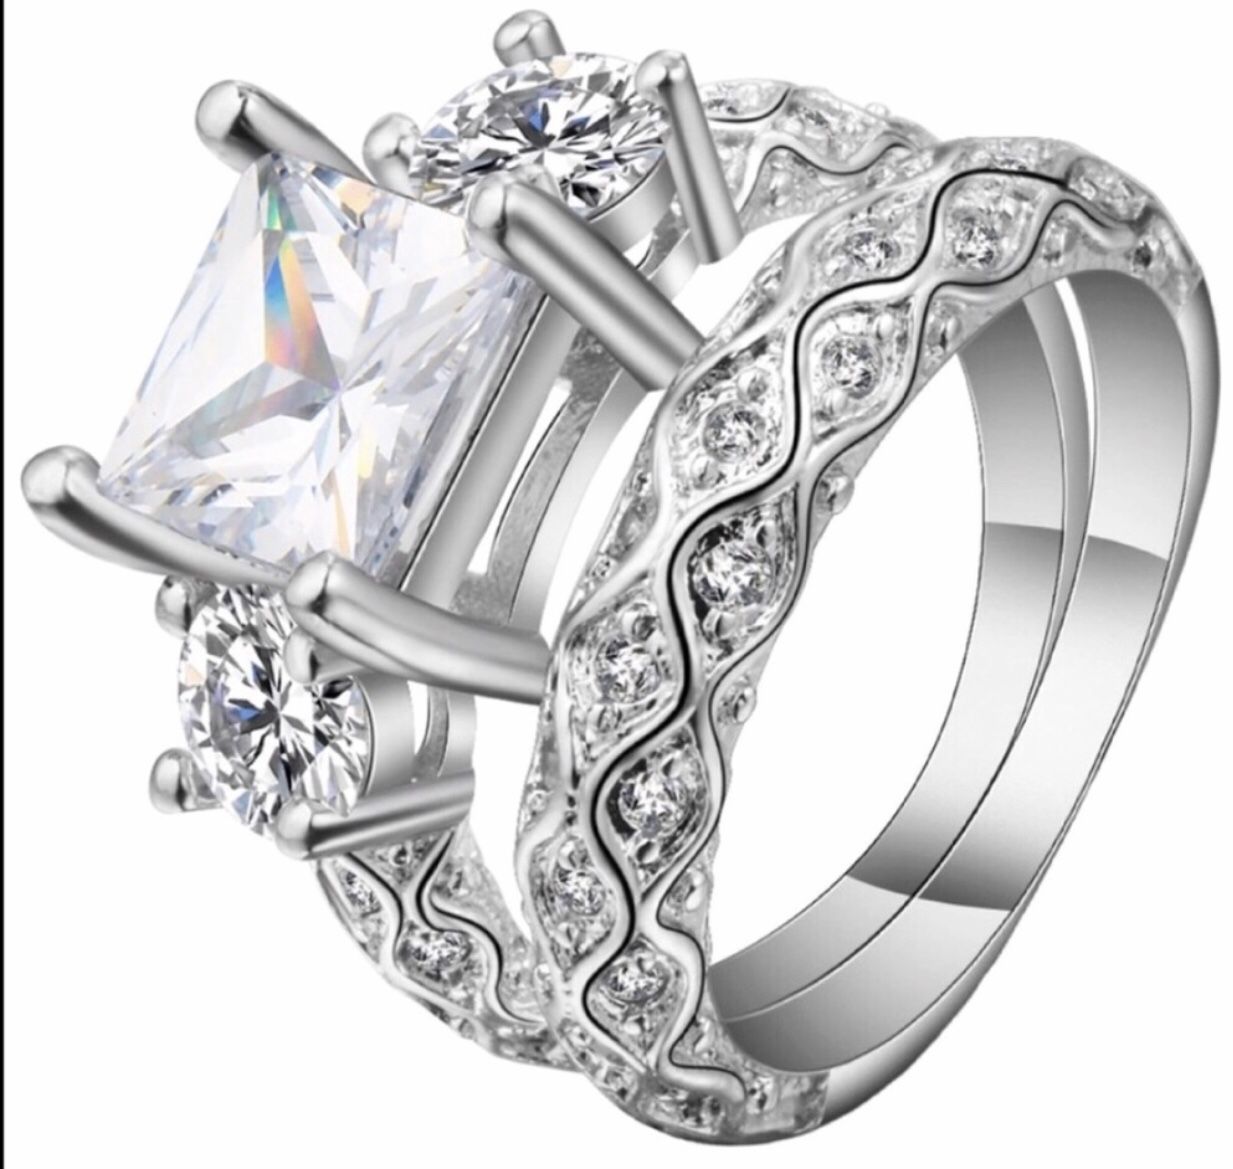 New wedding ring set engagement ring